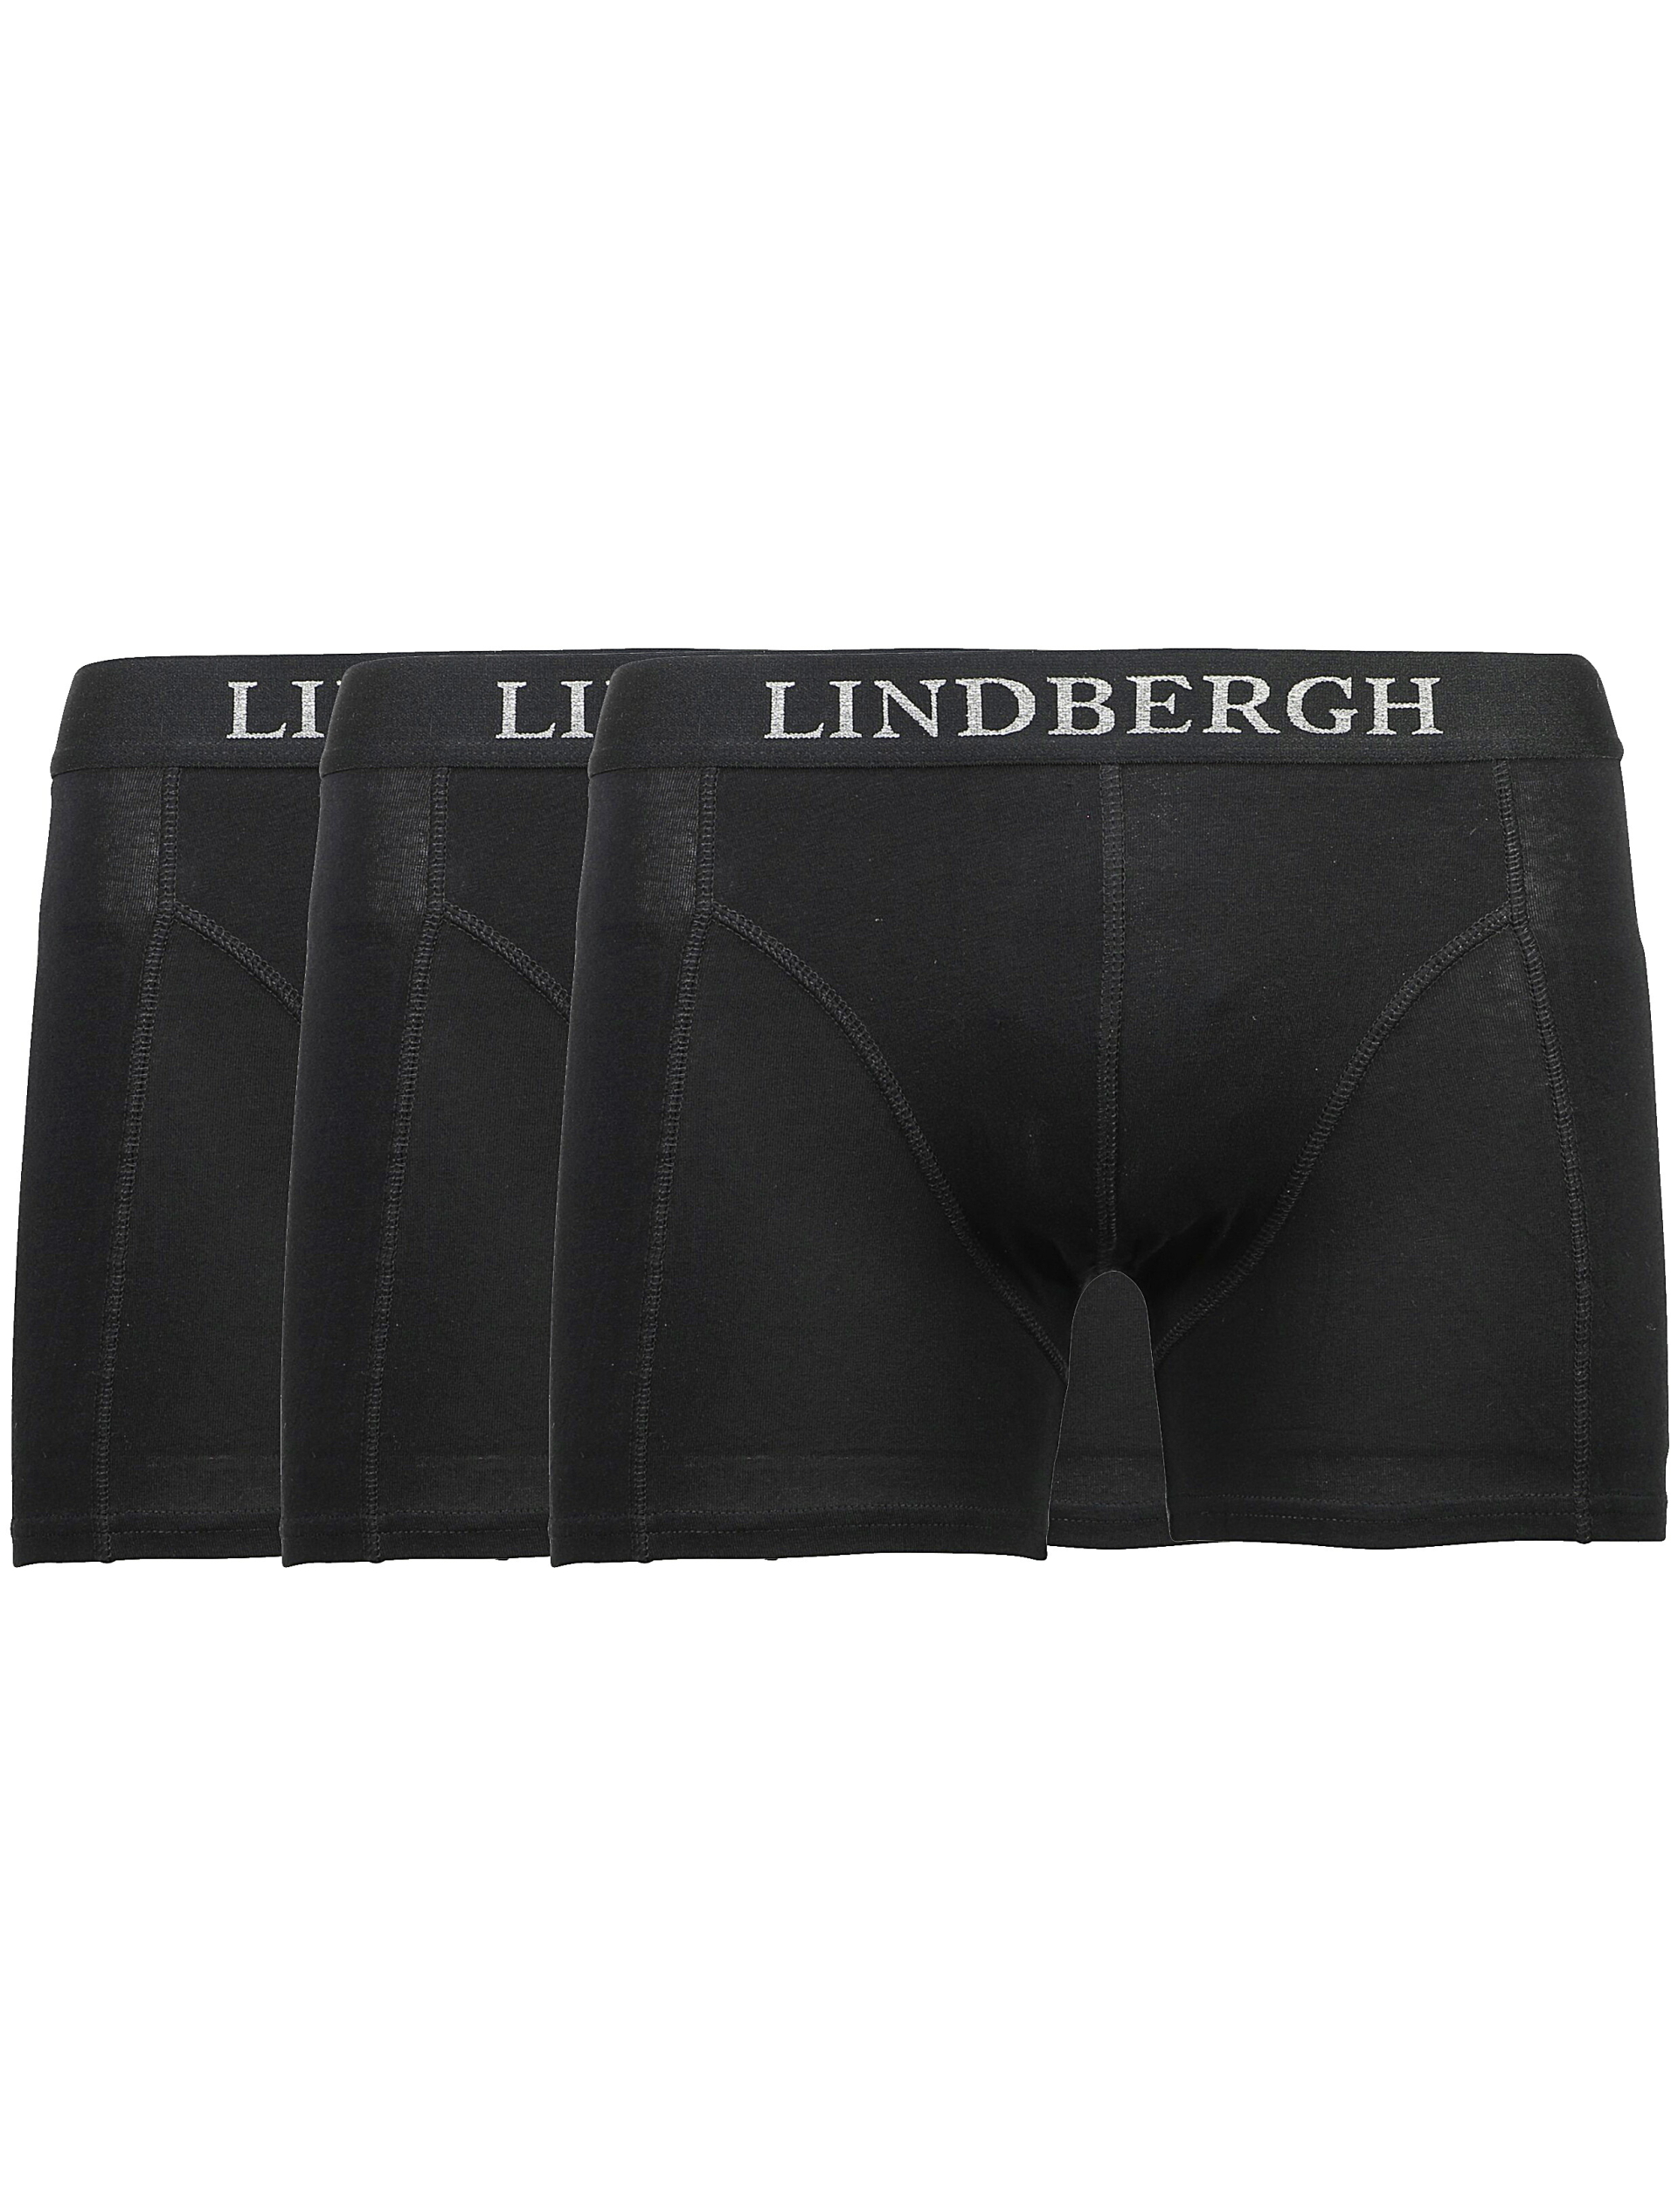 Lindbergh Unterhose schwarz / black